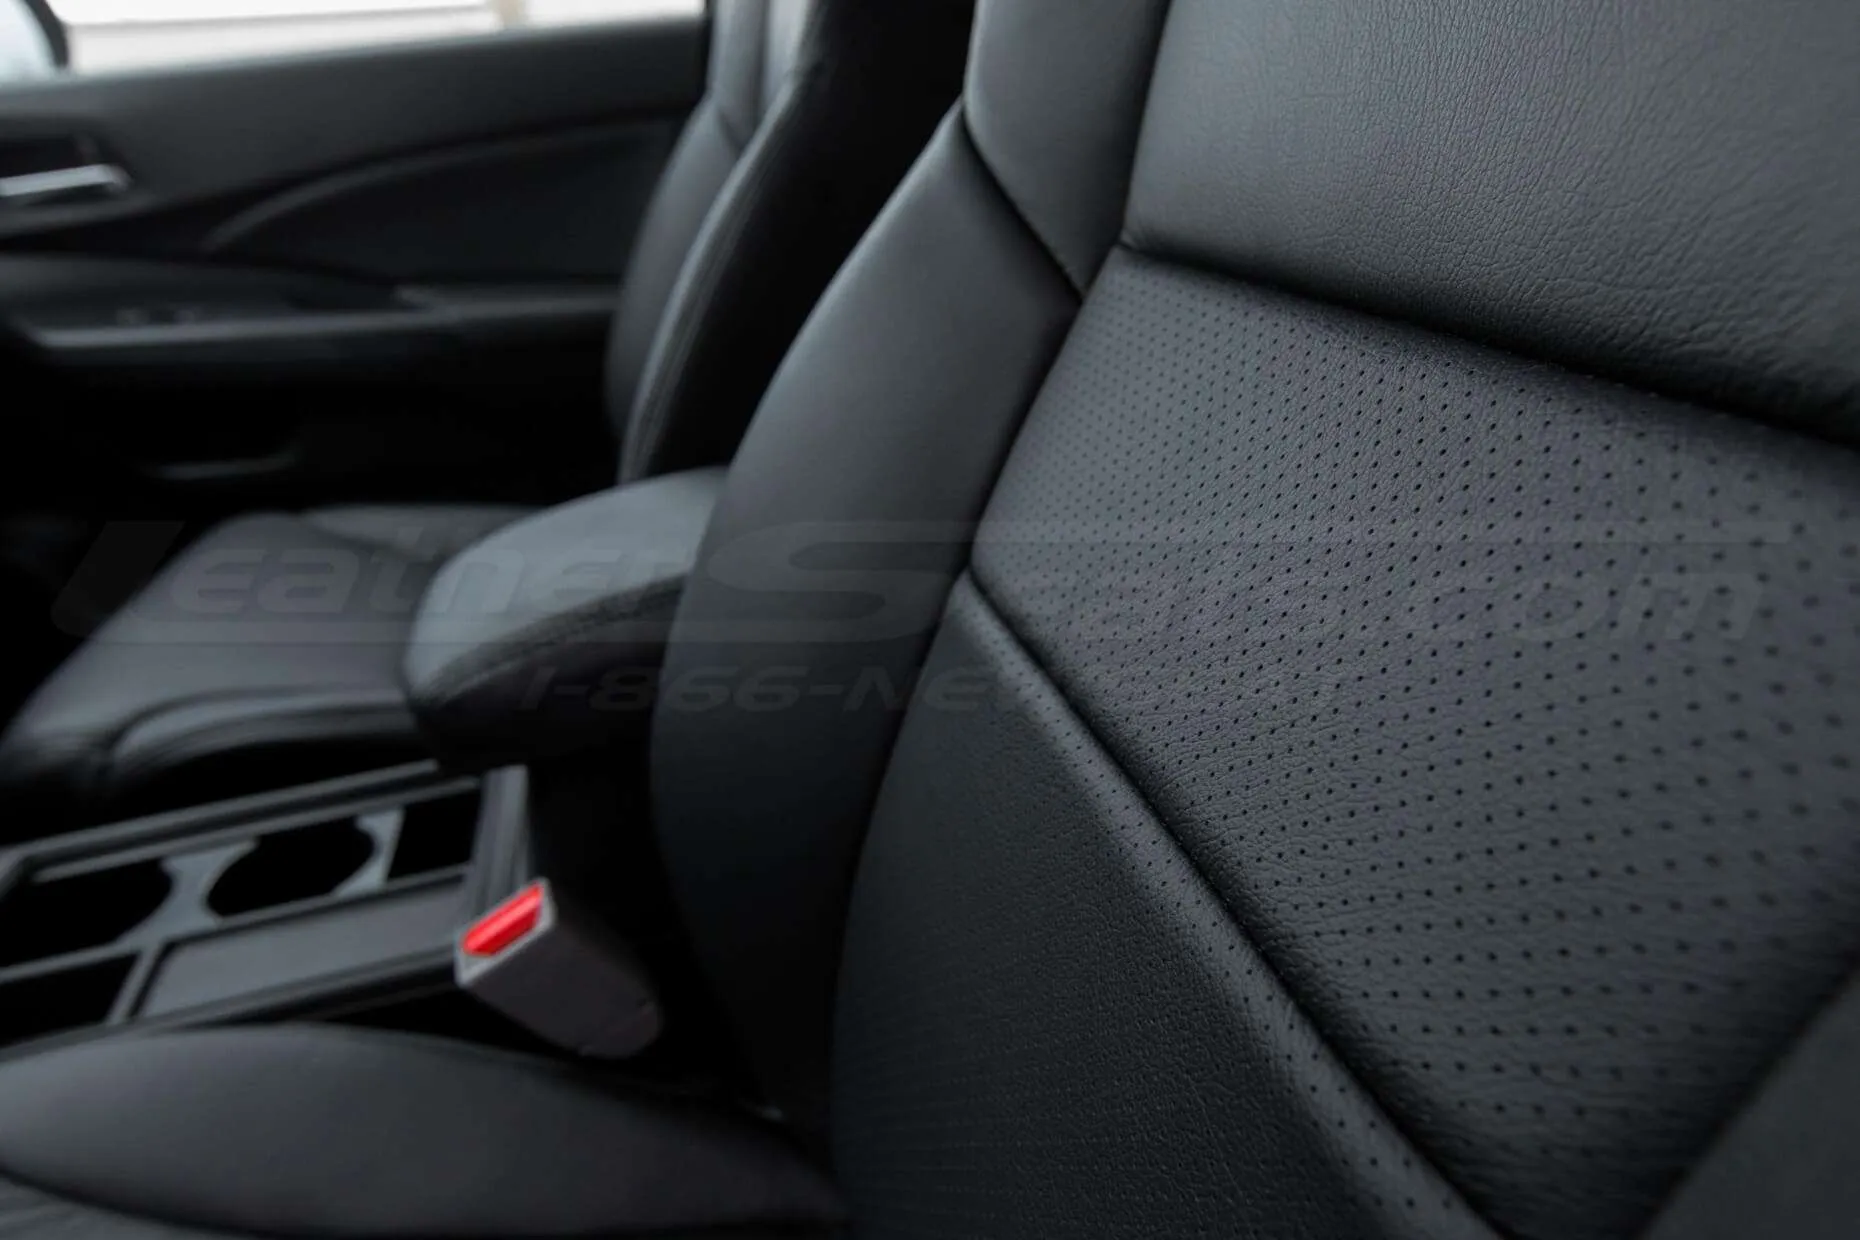 Honda CRV Leather Seat Kit - Black - Installed - Backrest perforation